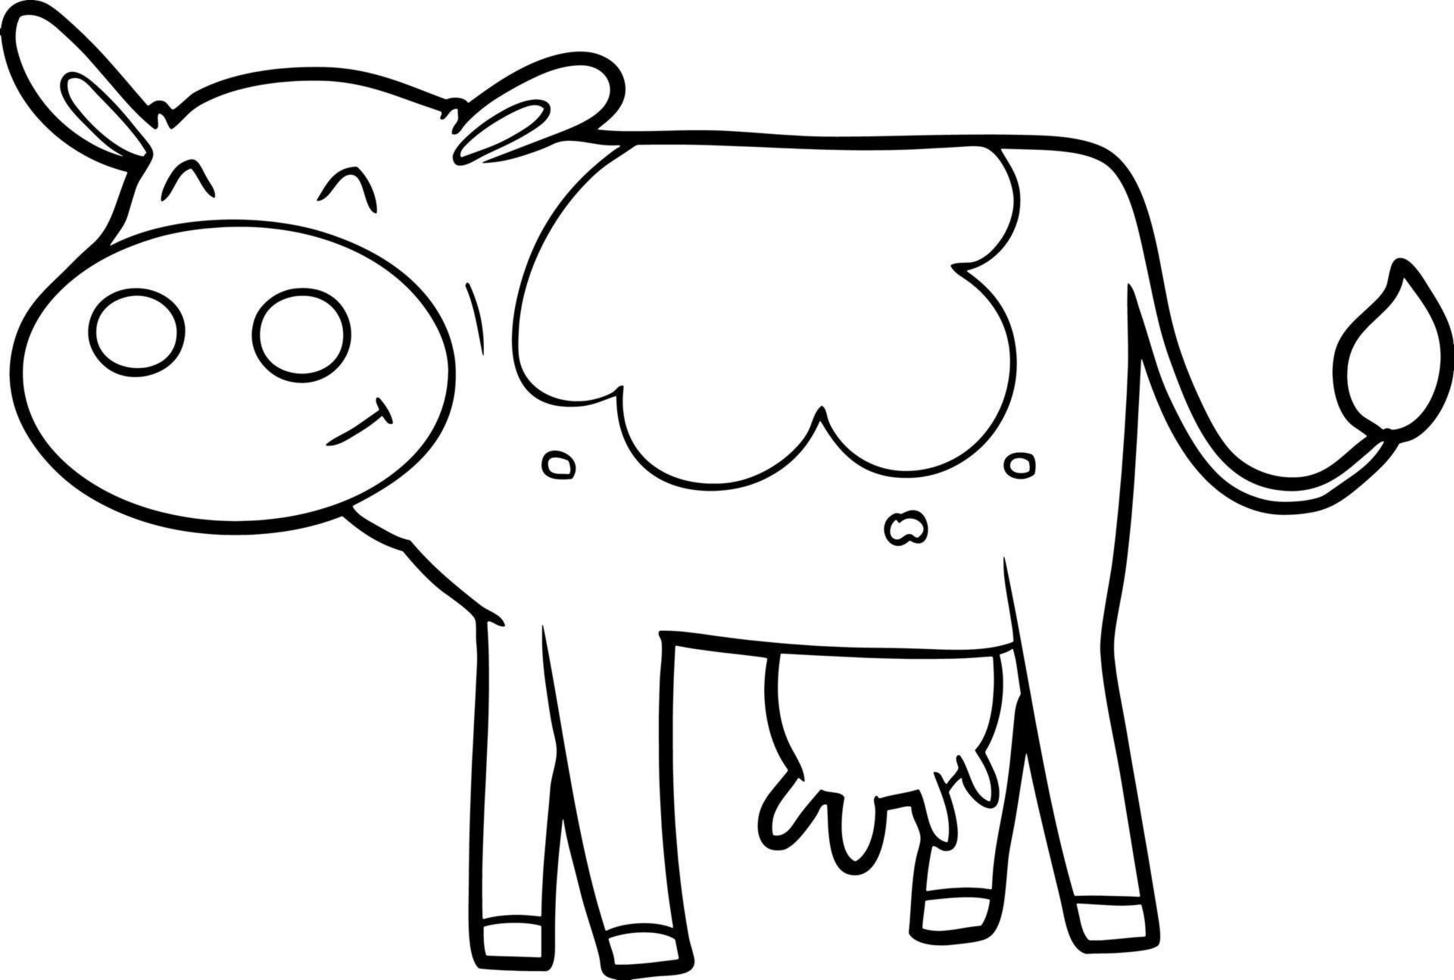 dessin animé vache heureuse vecteur